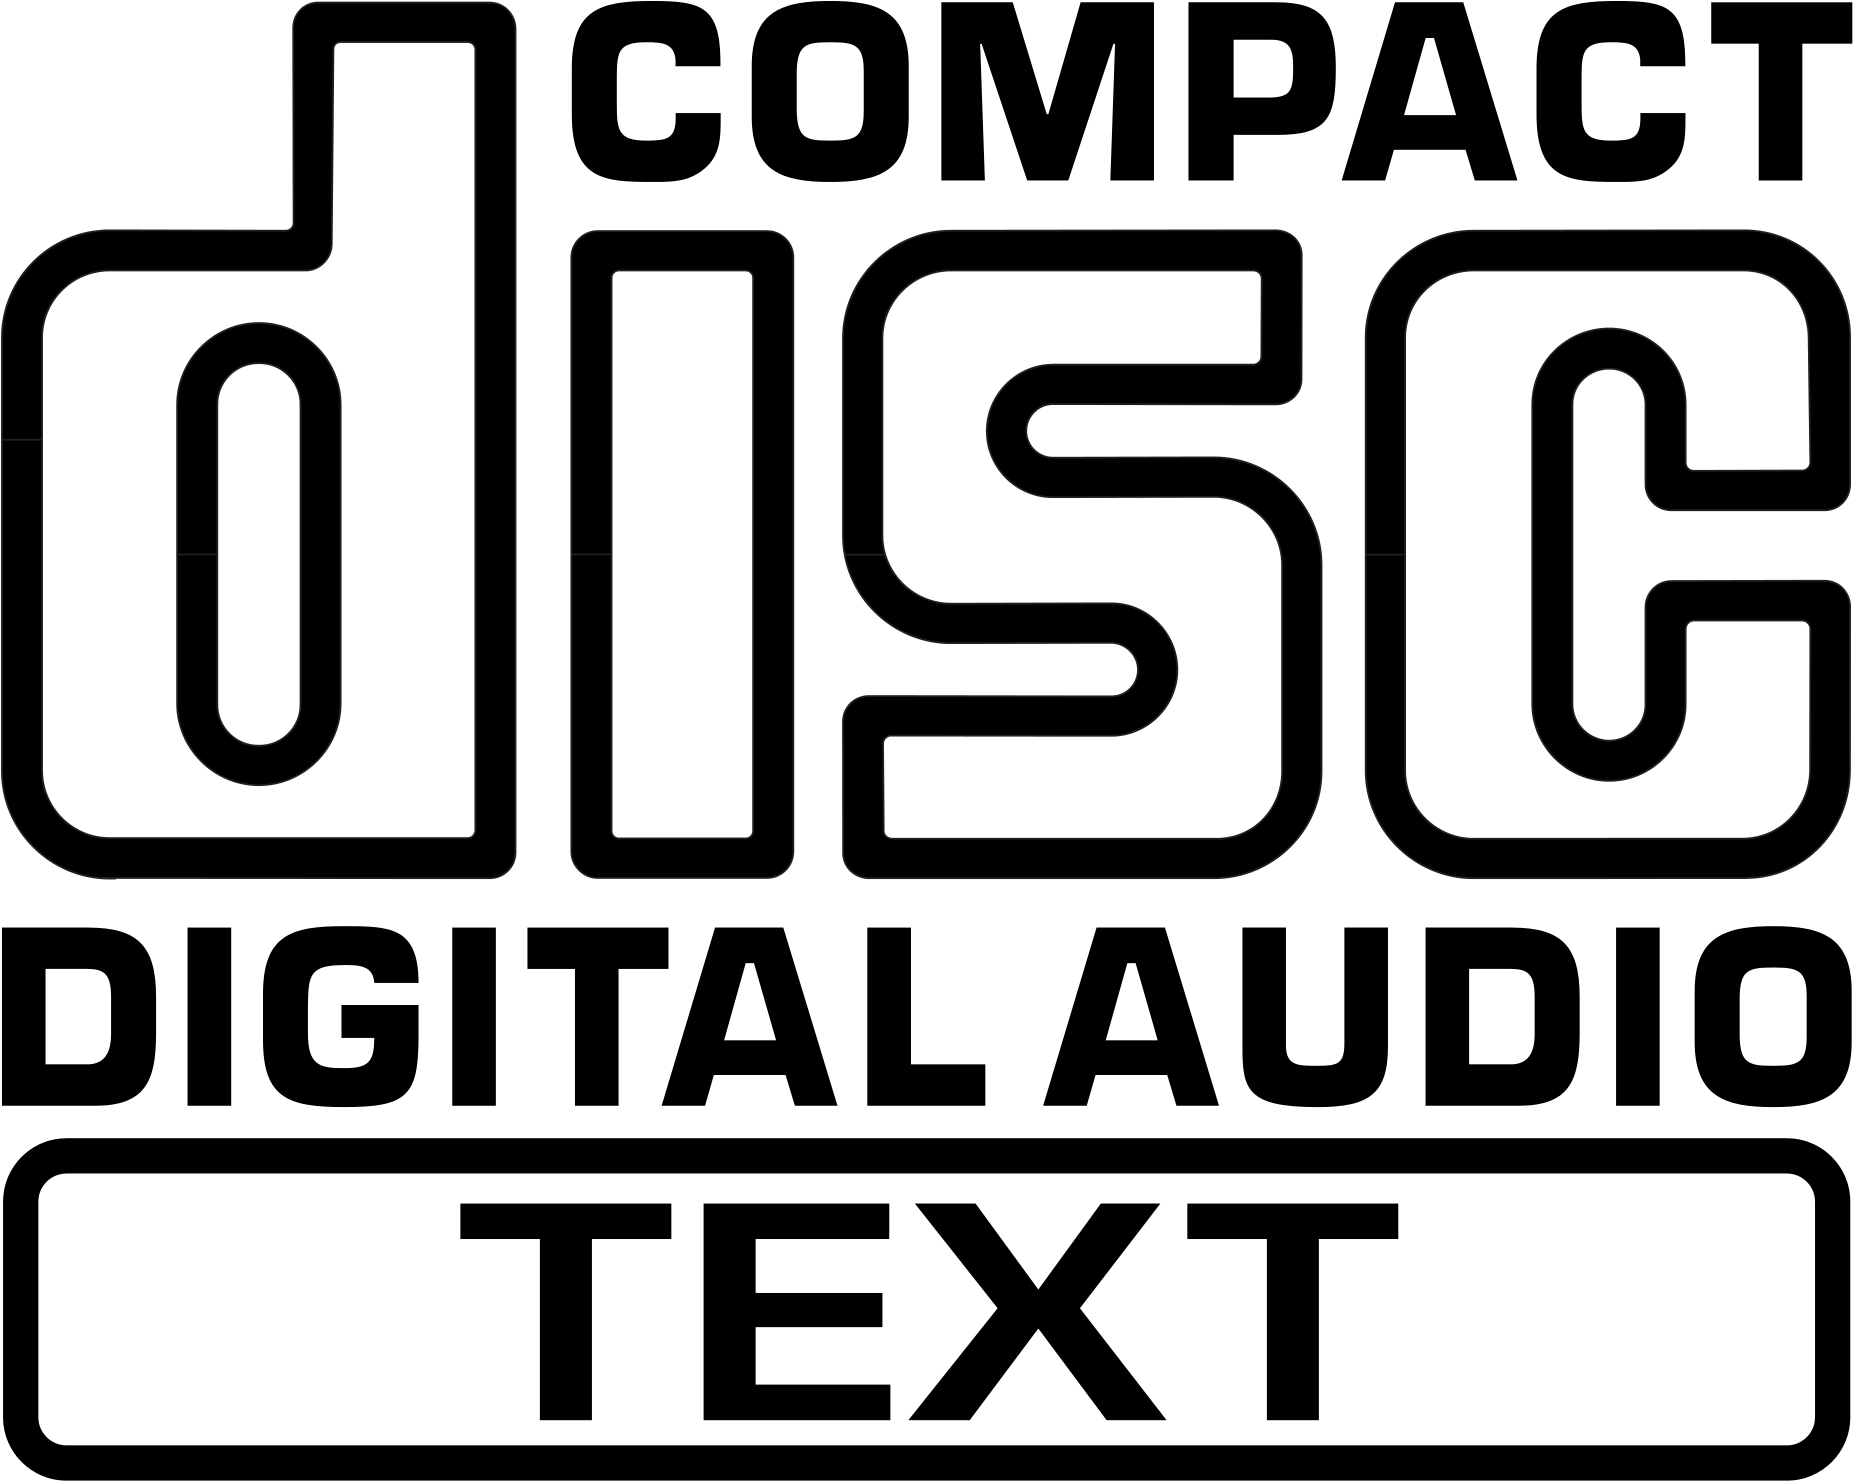 Digis audio. Логотип CD Disc. Compact Disc лого. Compact Disc Digital Audio. Compact Disc Digital Audio logo.